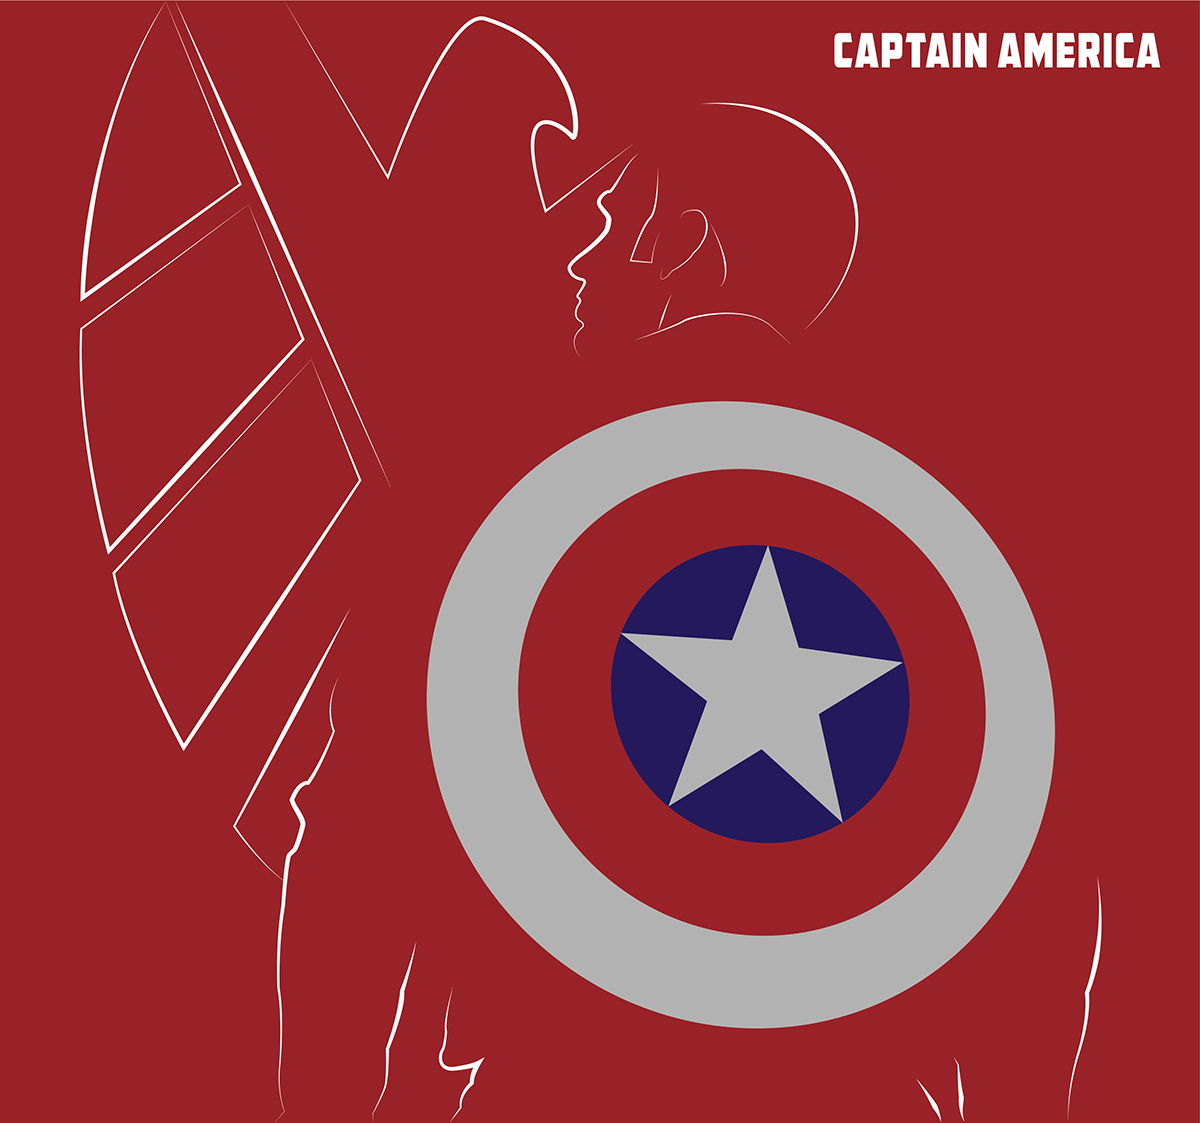 SuperHero spider-man iron man Thor tonystark comics vector Illustrator captain america steve rogers